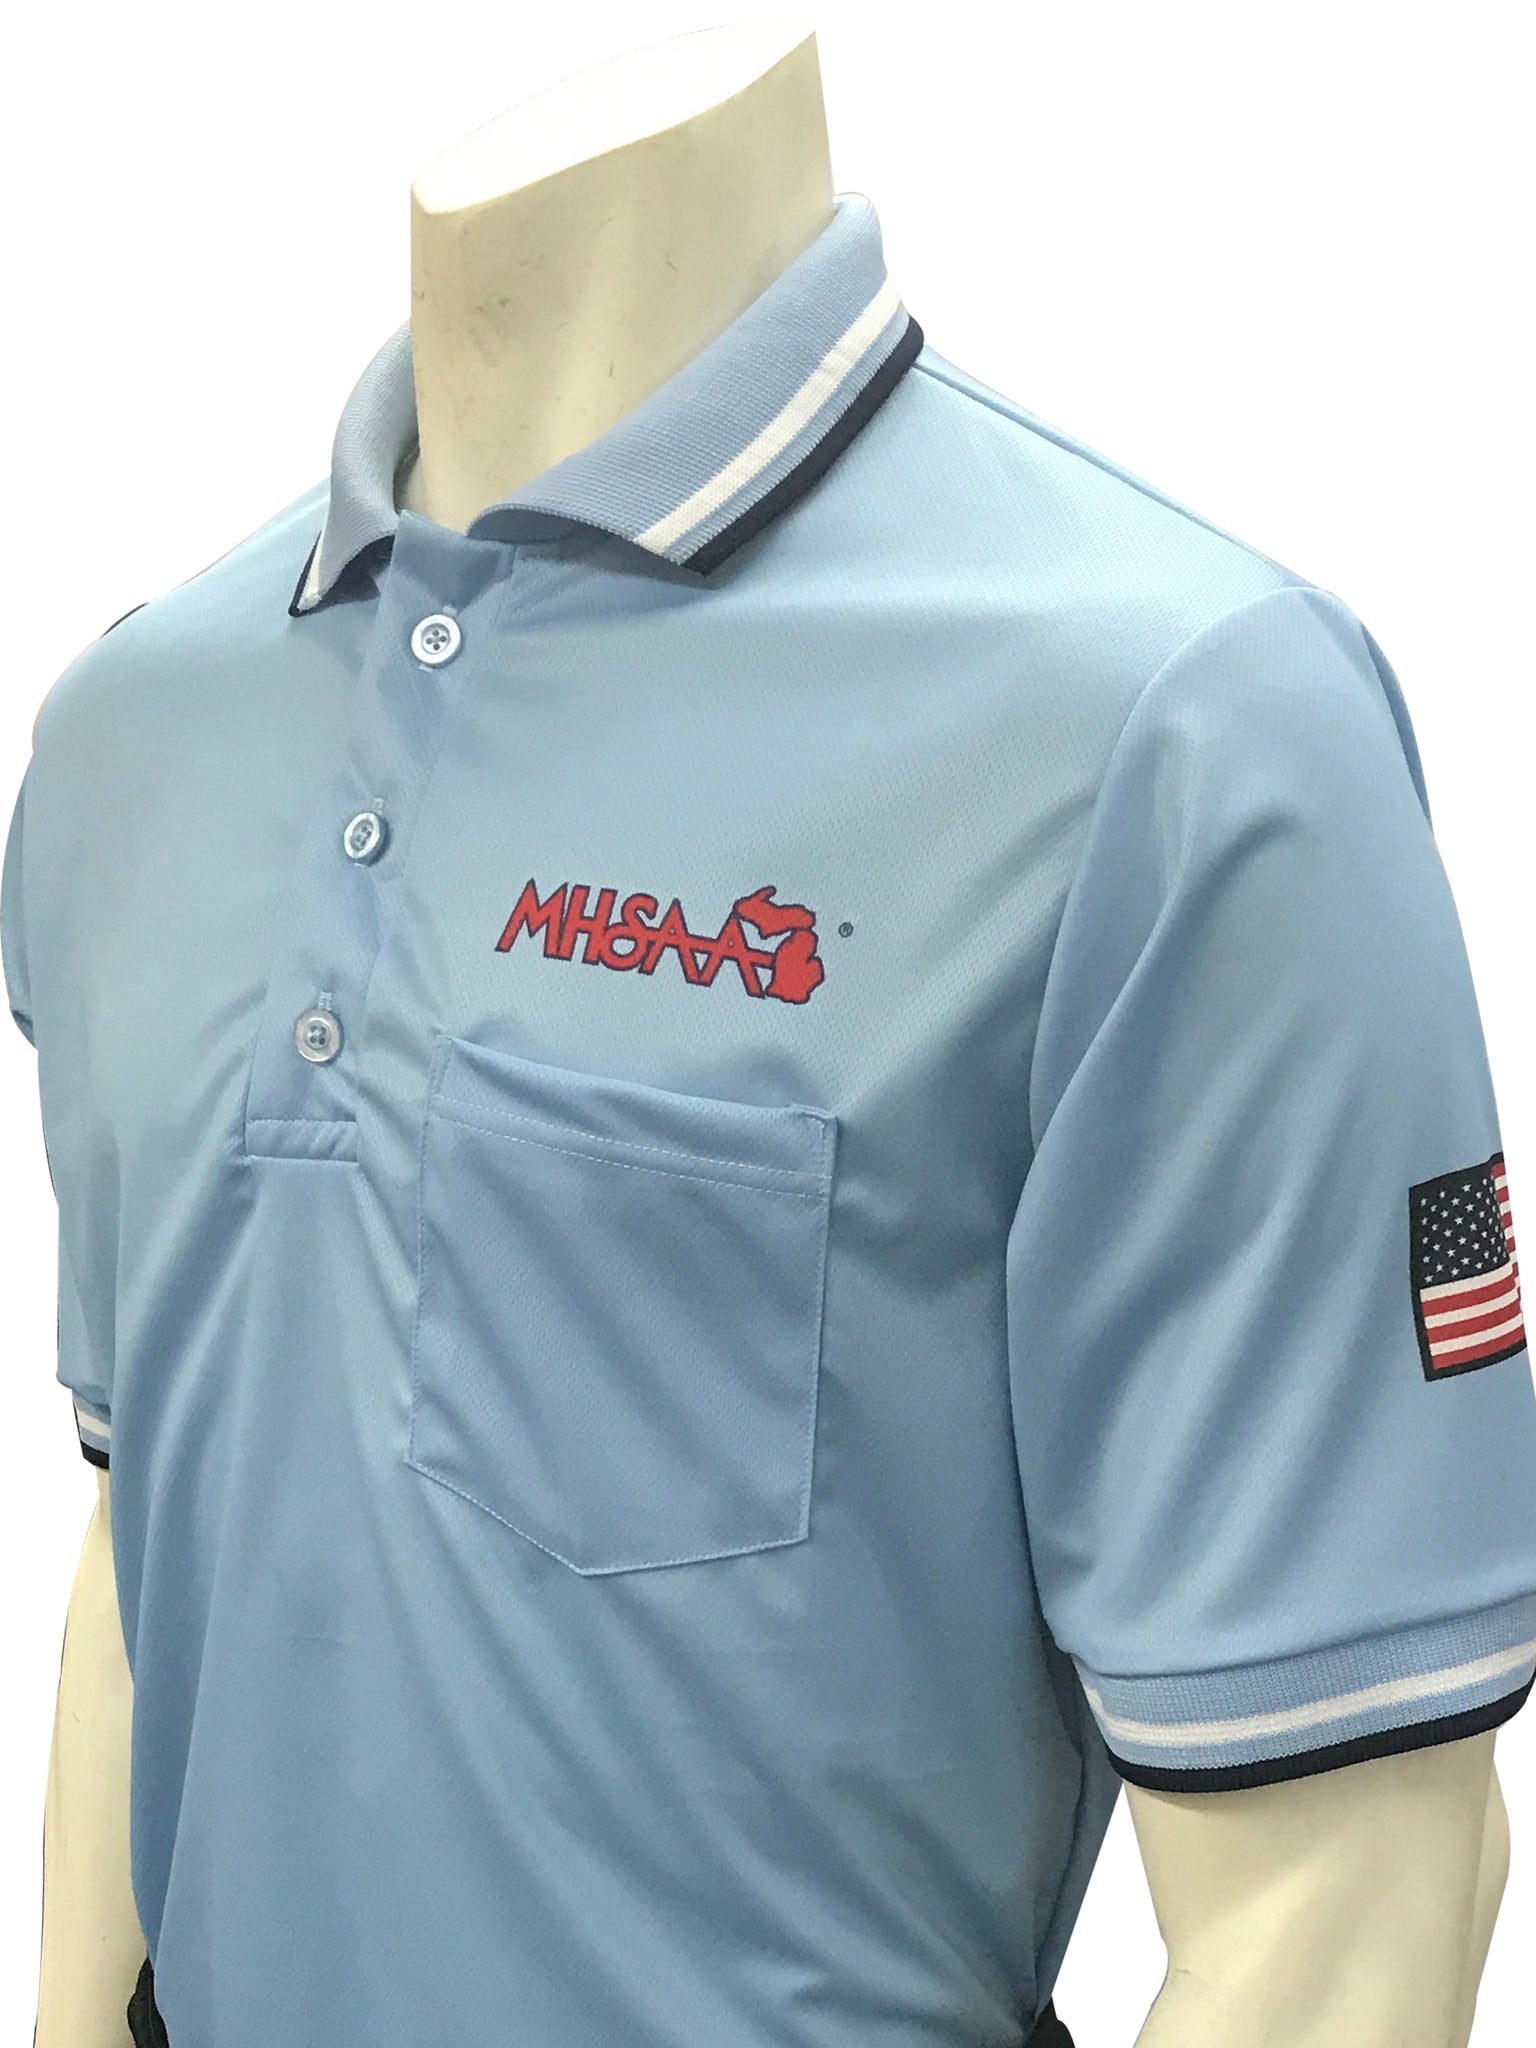 USA300MI - Smitty "Made in USA" - Ump Shirt Logo Above Pocket Powder Blue